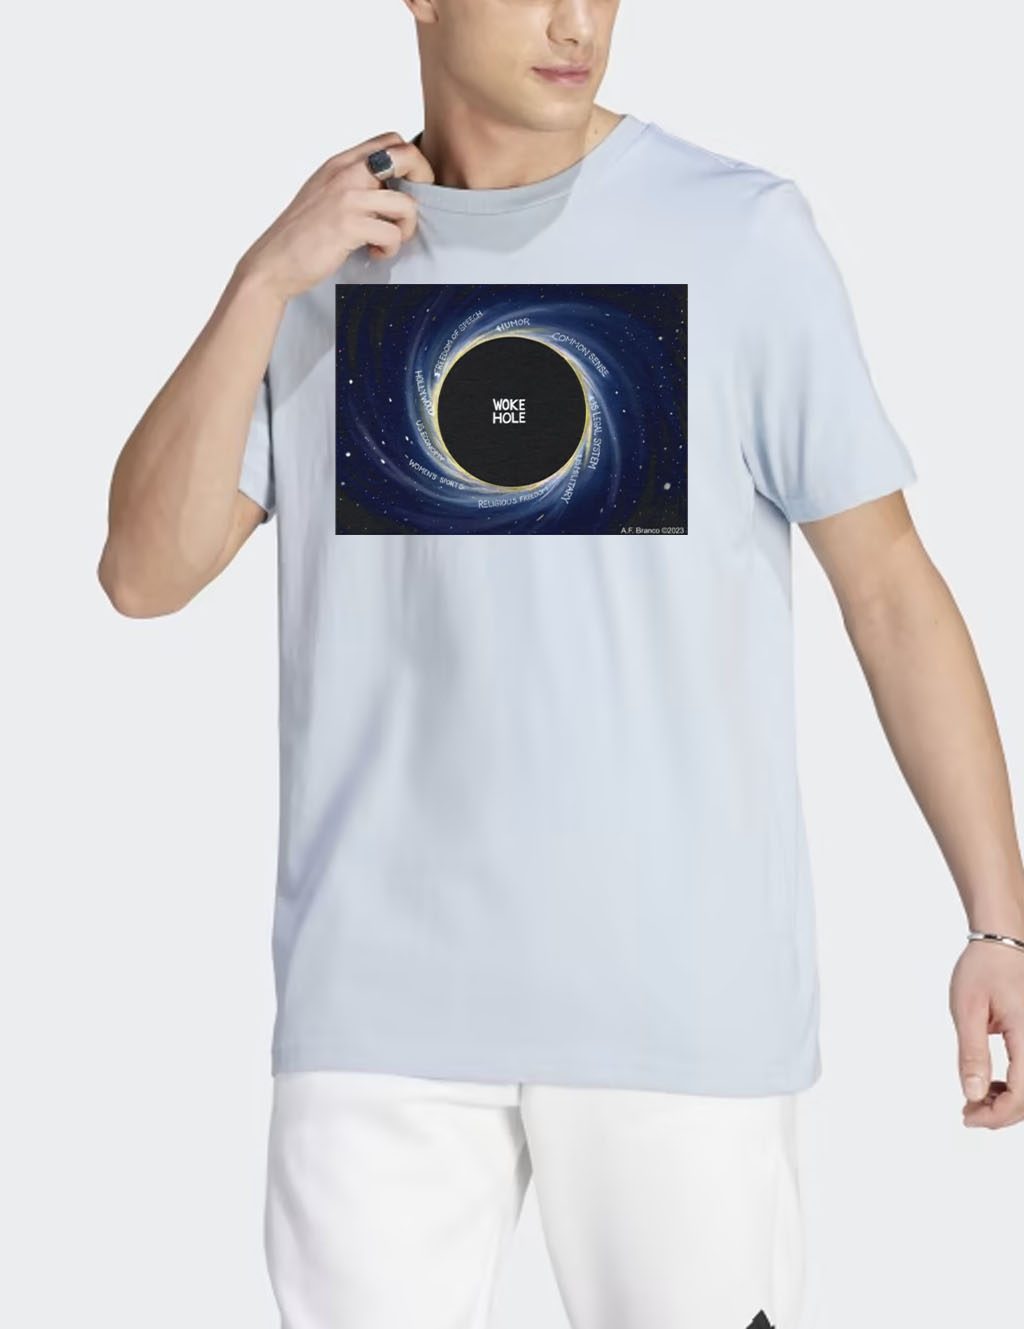 Black Hole Change A F Branco Design T Shirts